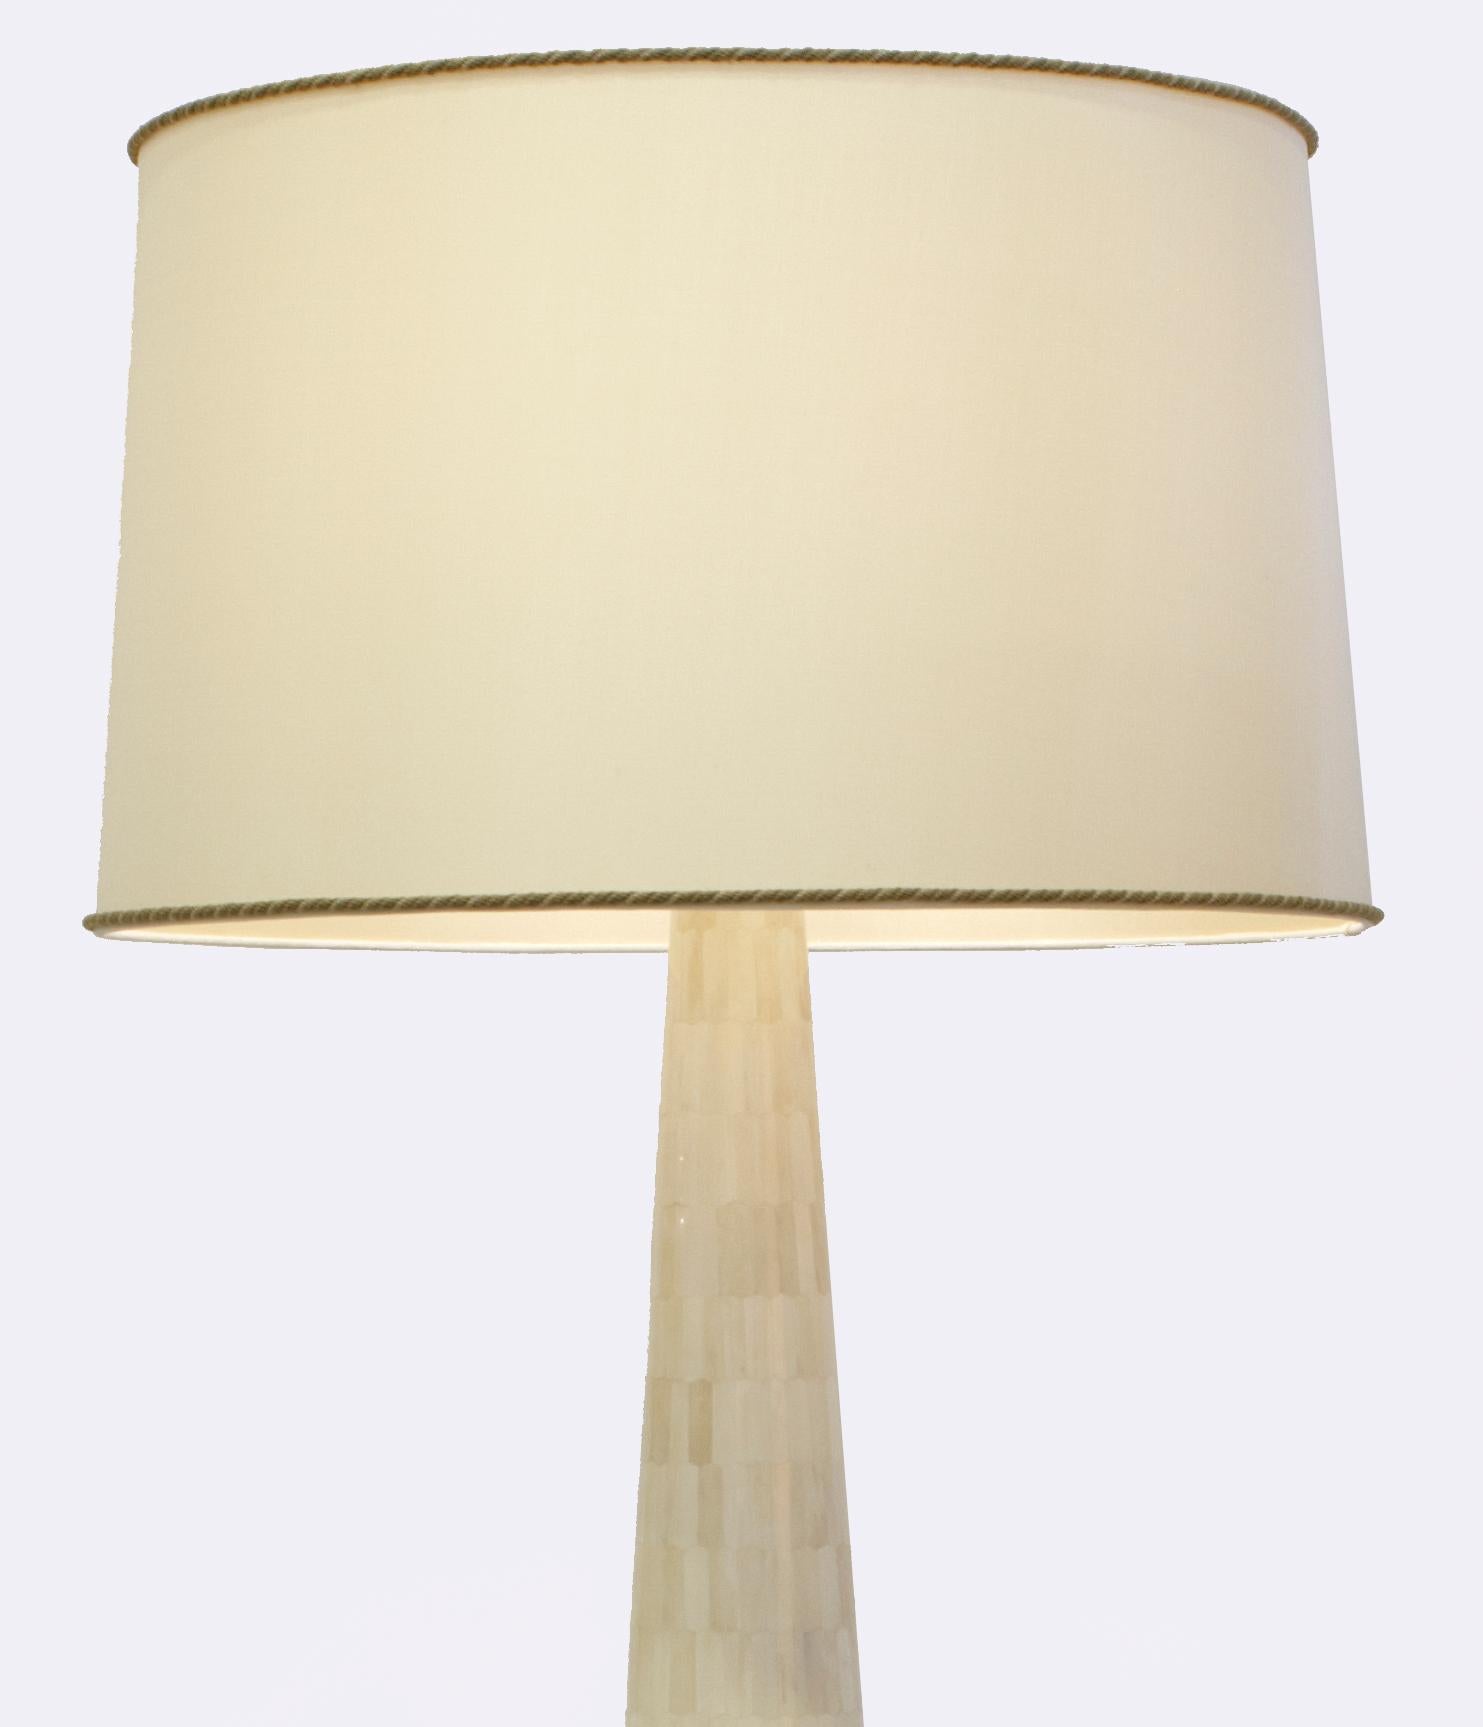 tall cone lamp shade